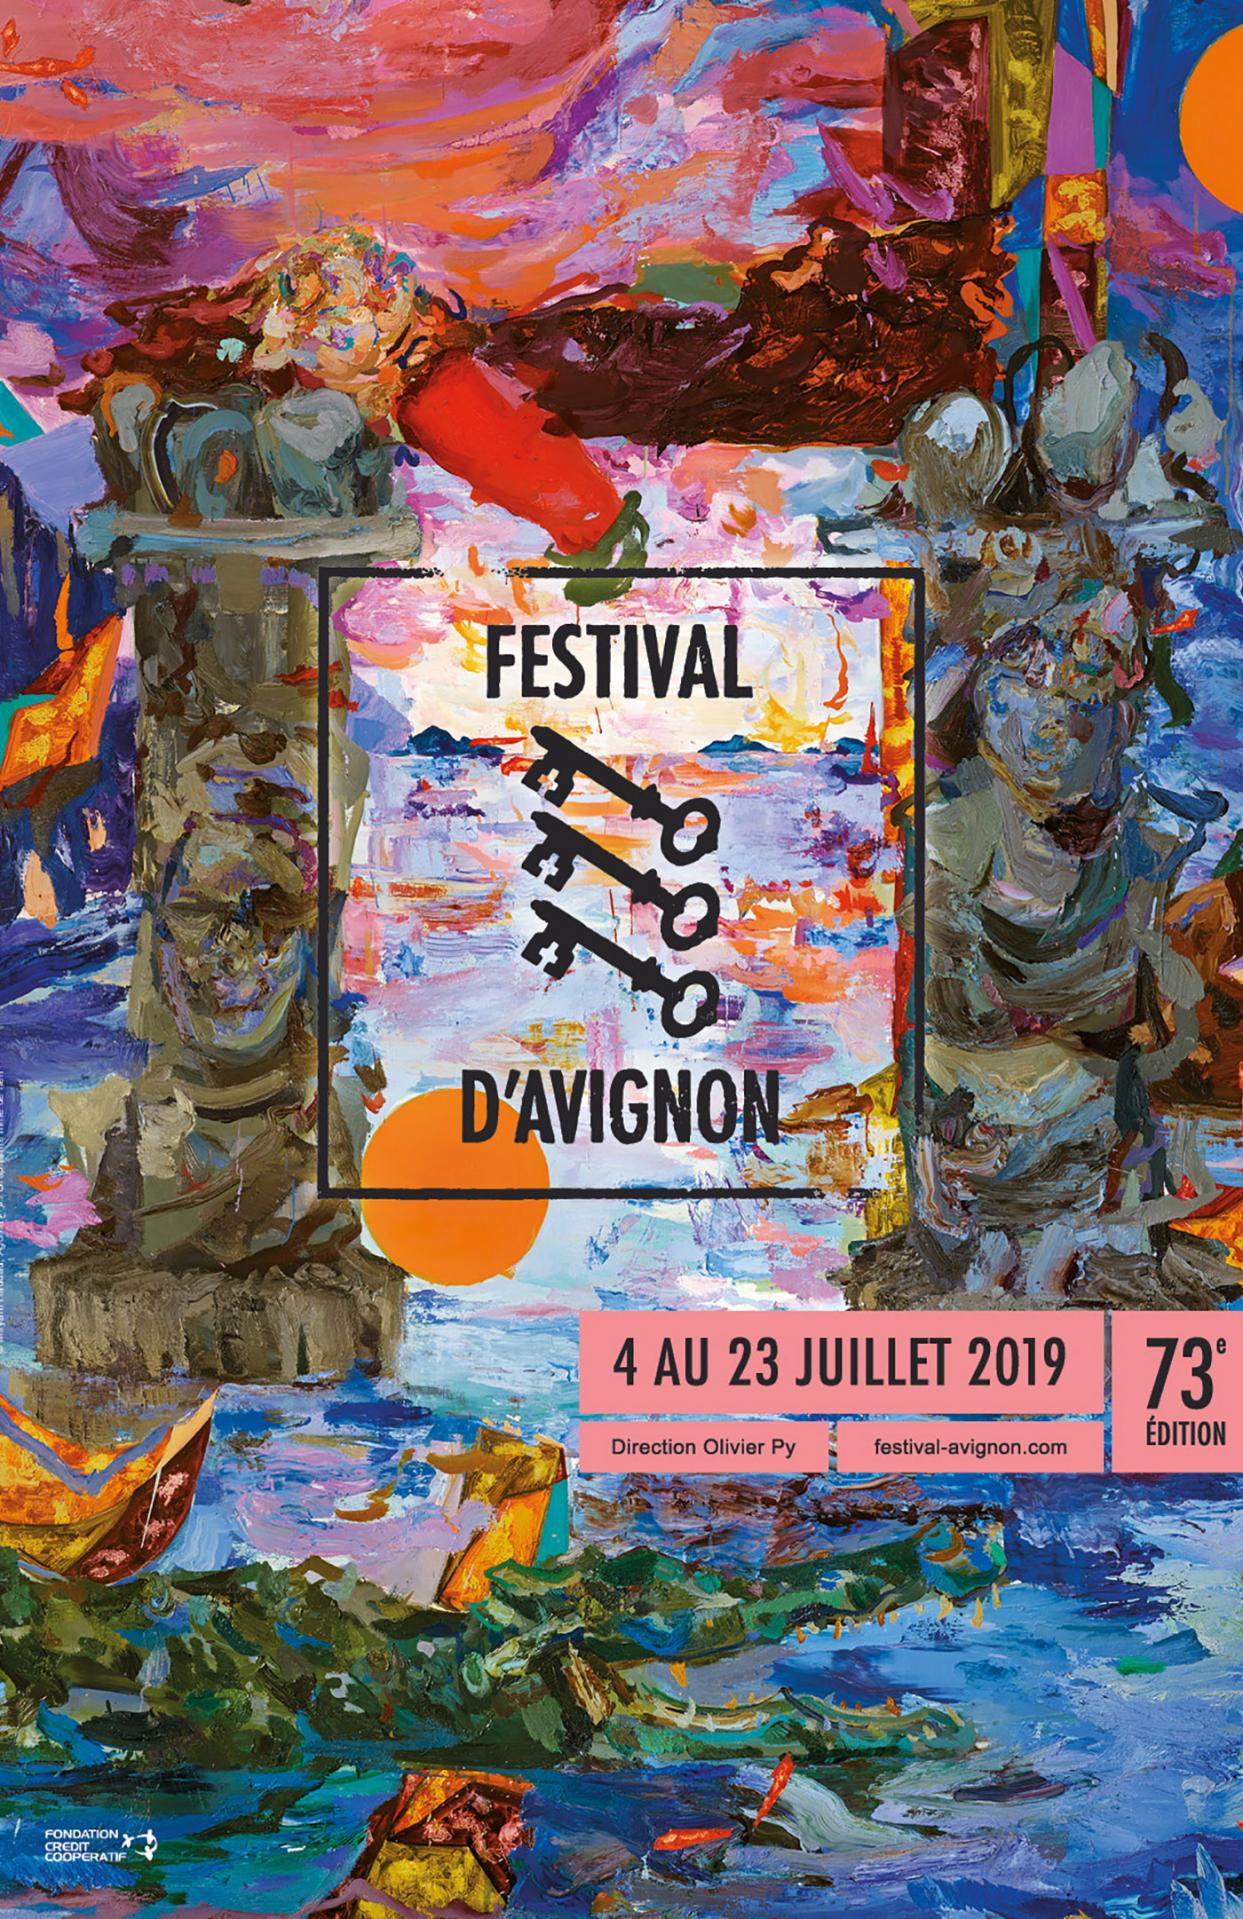 Festival avignon 2019